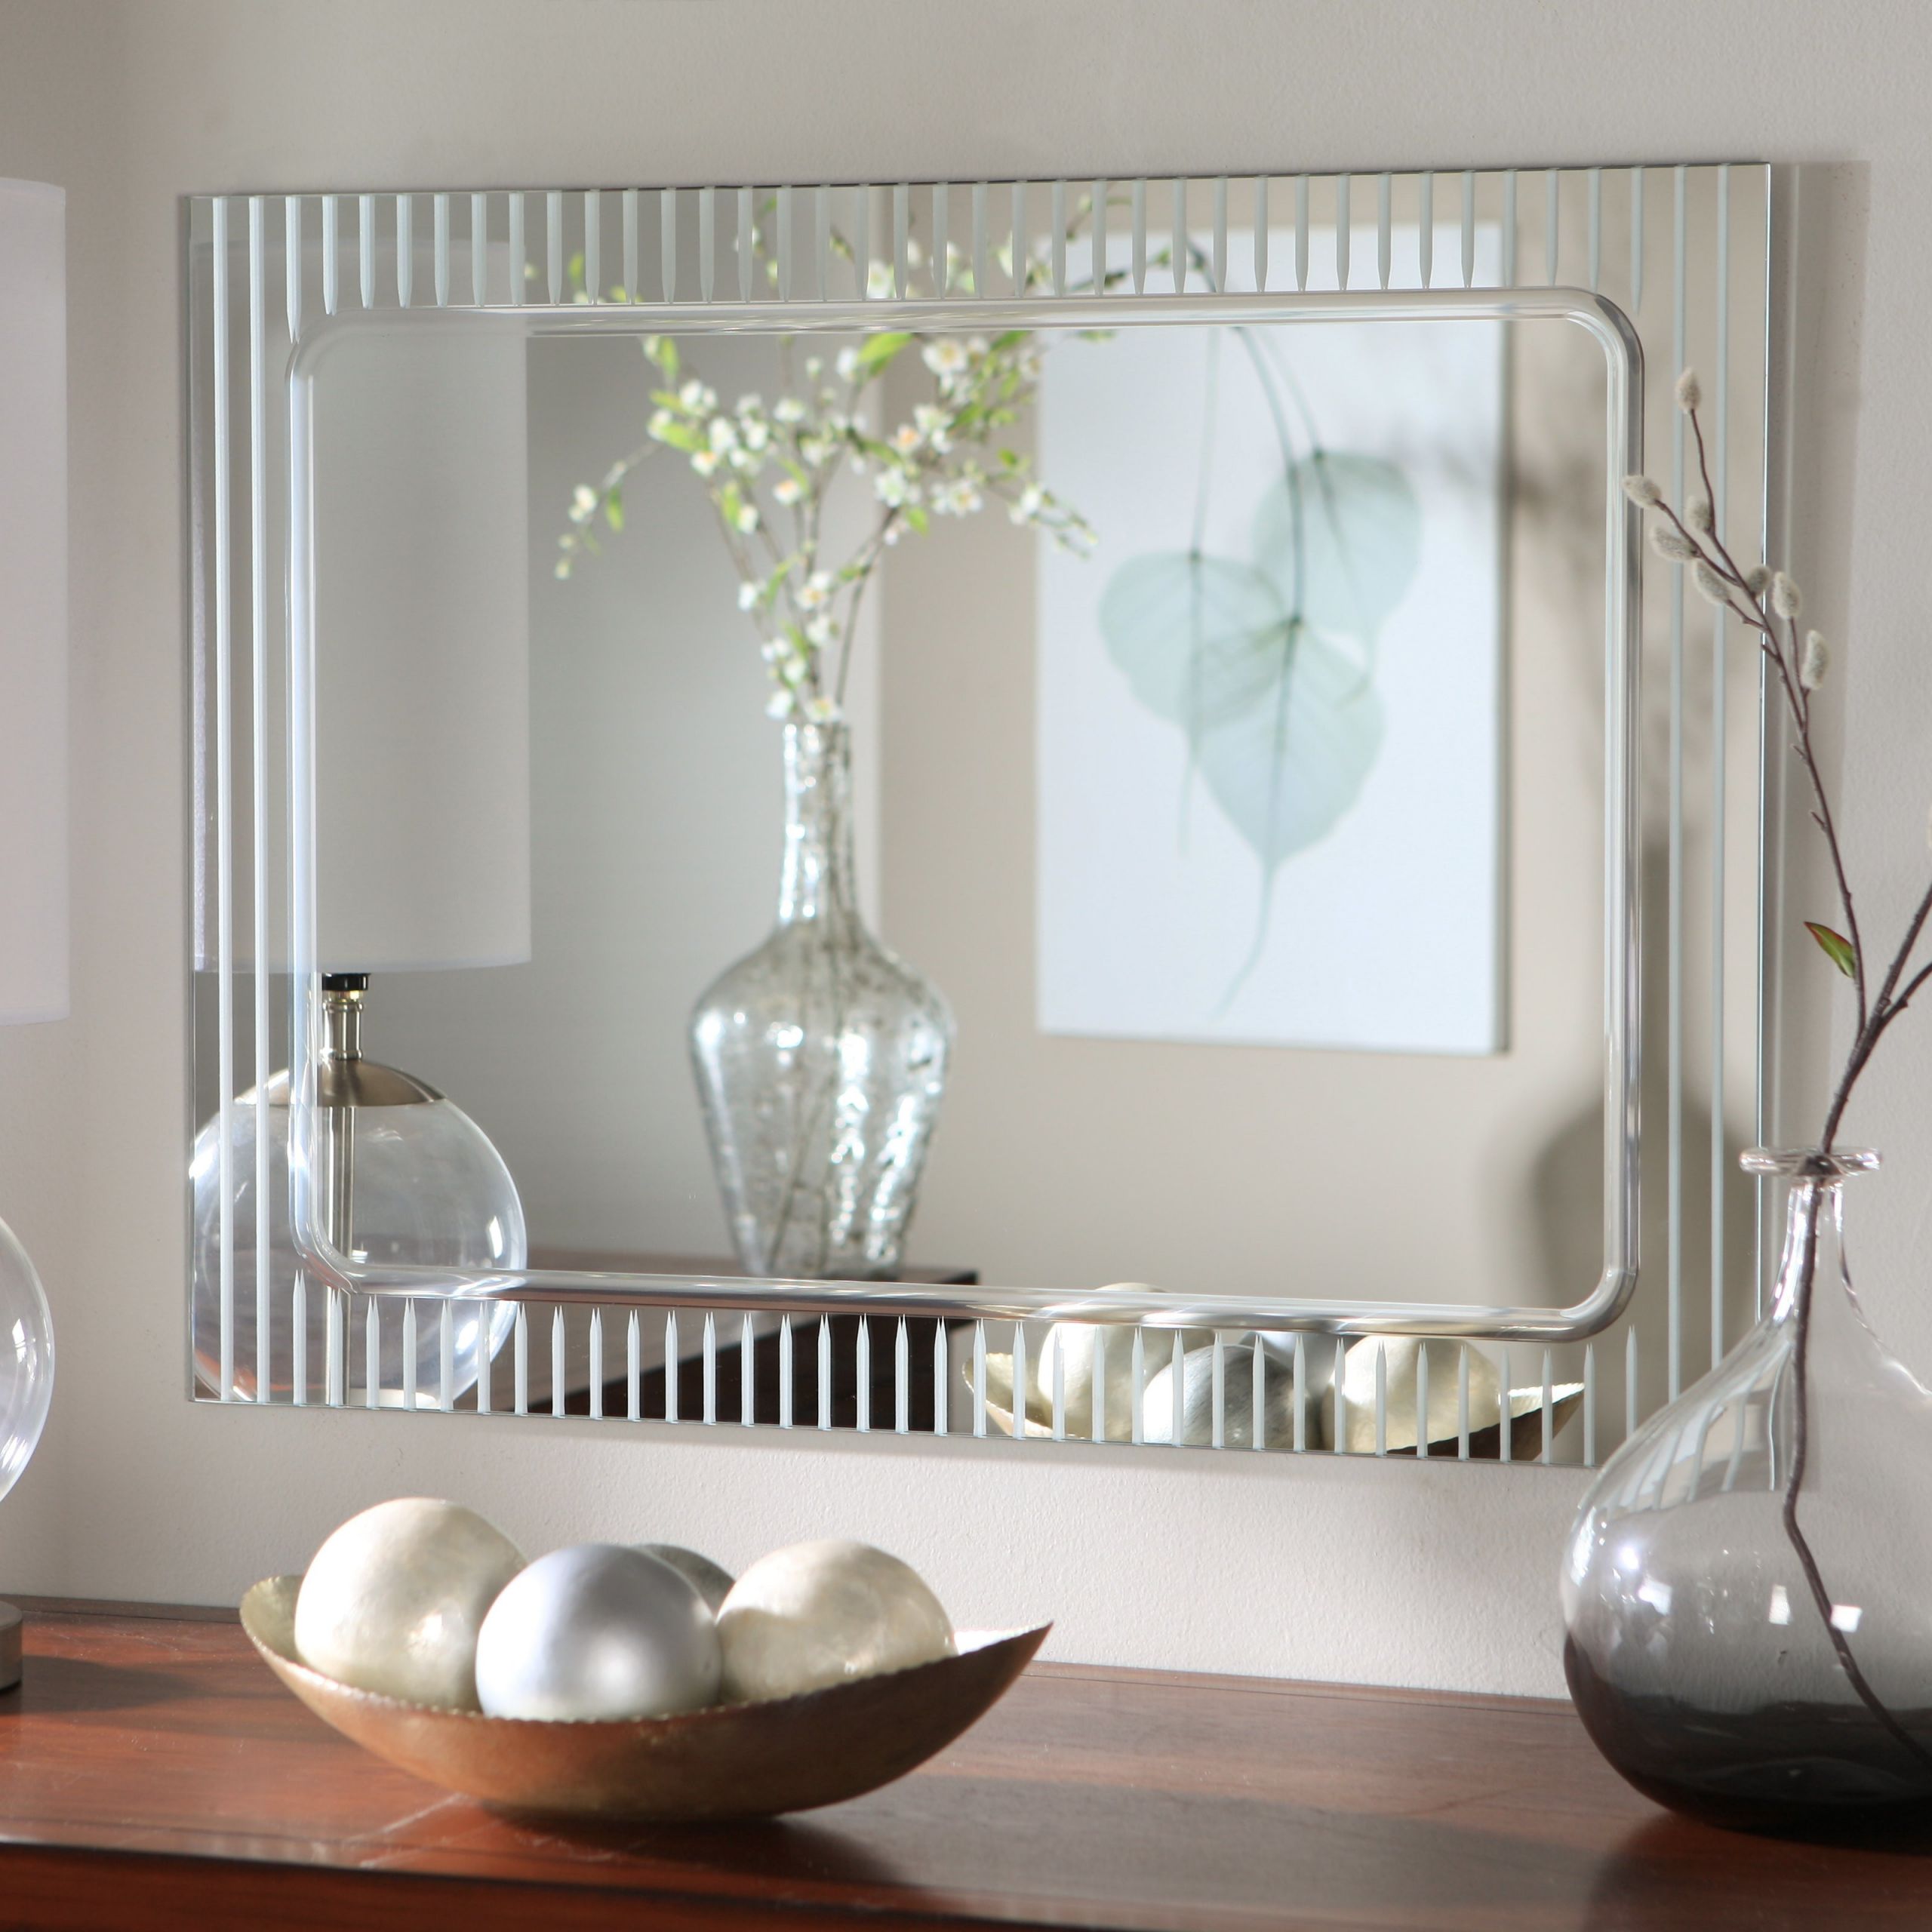 Discount Bathroom Mirror
 15 Best Ideas Small Decorative Mirrors Cheap